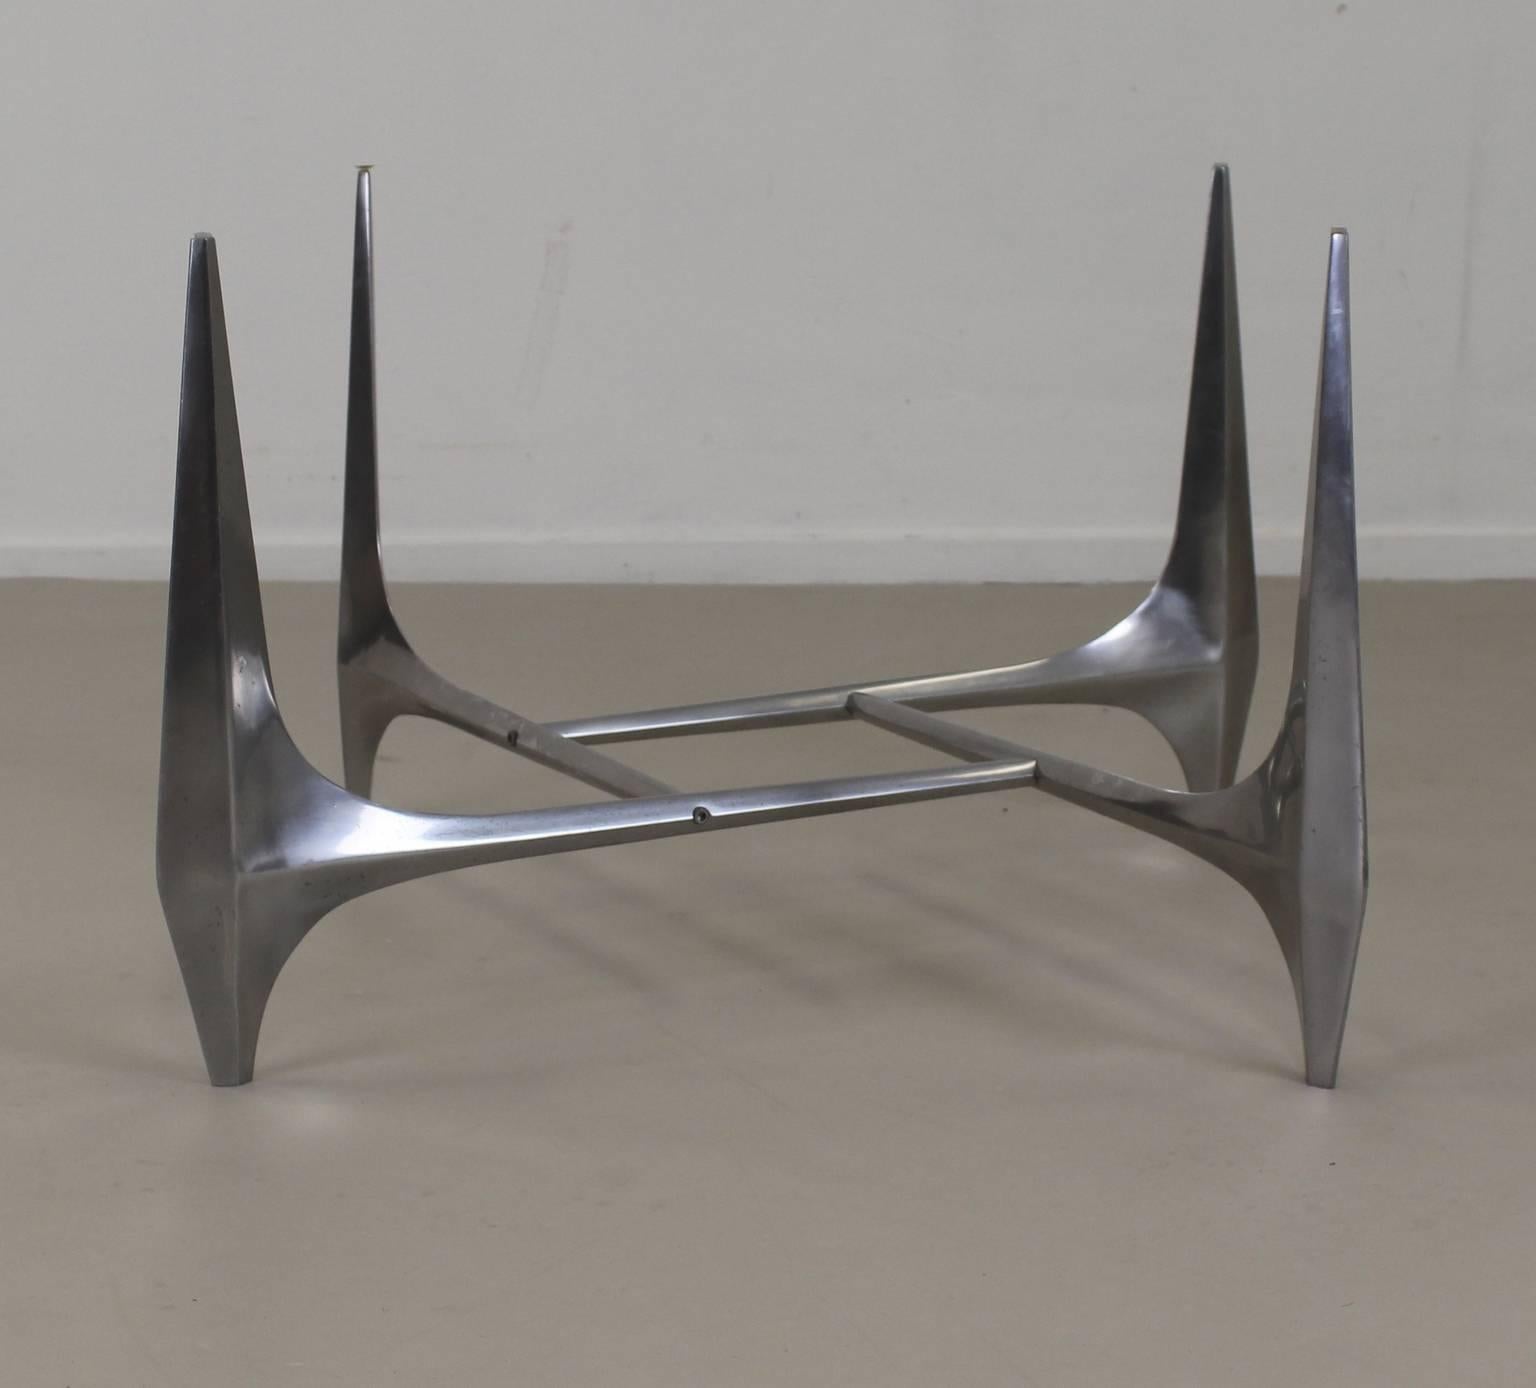 Nice sculptural German design coffee table
Designer: Knut Hesterberg
Manufacturer: Ronald Schmitt Germany
Brushed aluminium
Safety glass 1cm thick
